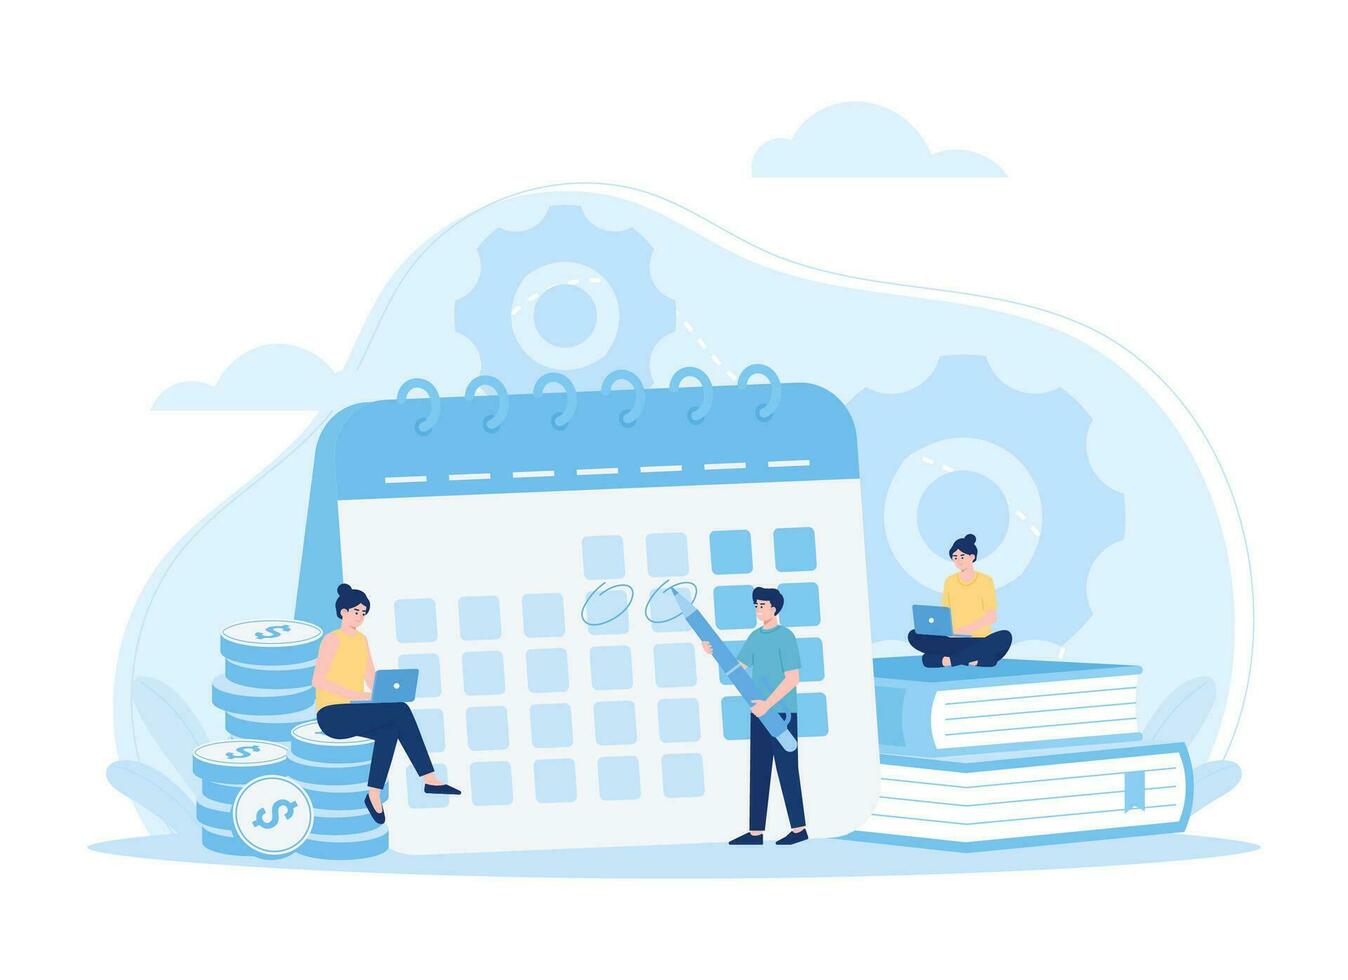 Time management  people make schedule plans concept flat illustration vector